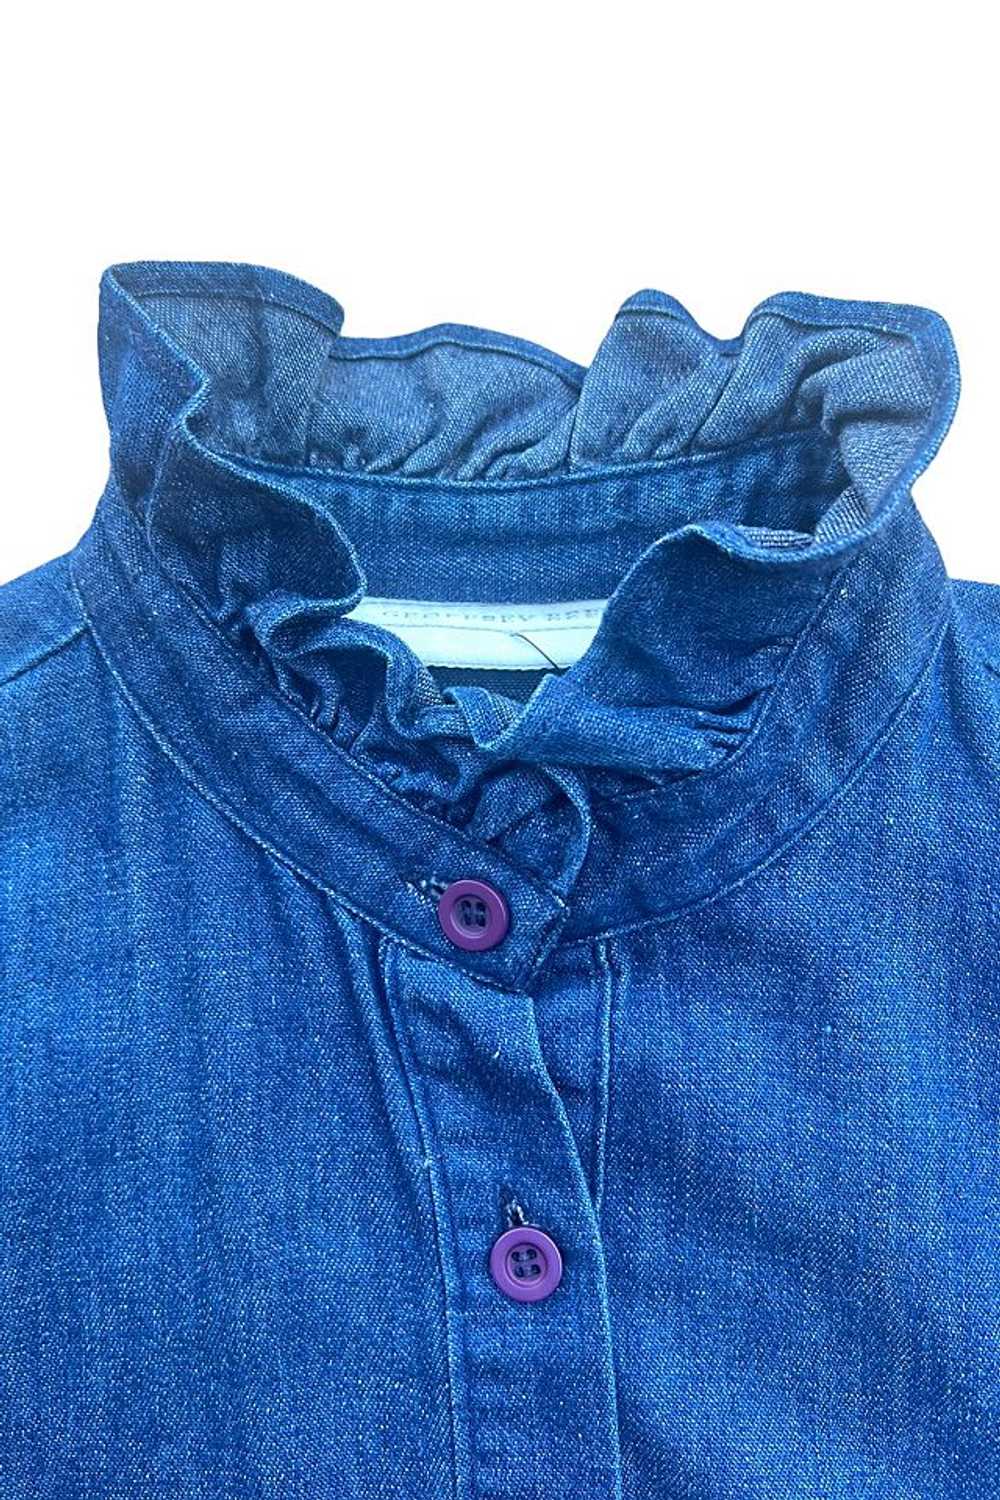 Vintage 1980s Geoffrey Beene Ruffled Jeans Shirt … - image 3